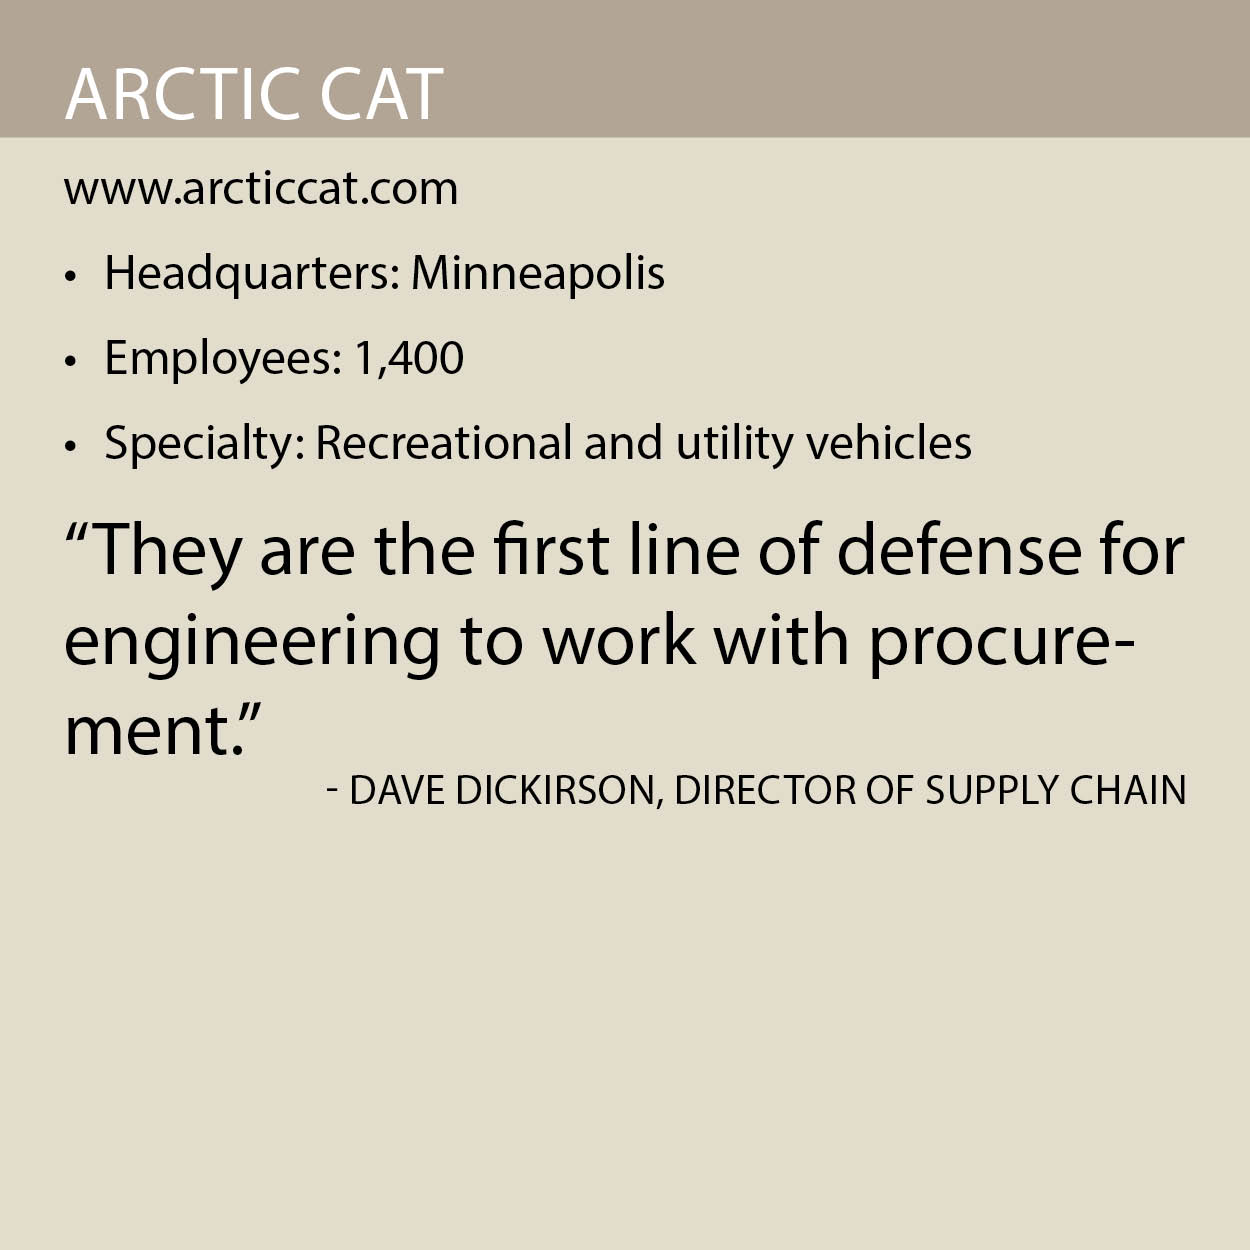 Arctic Cat fact box